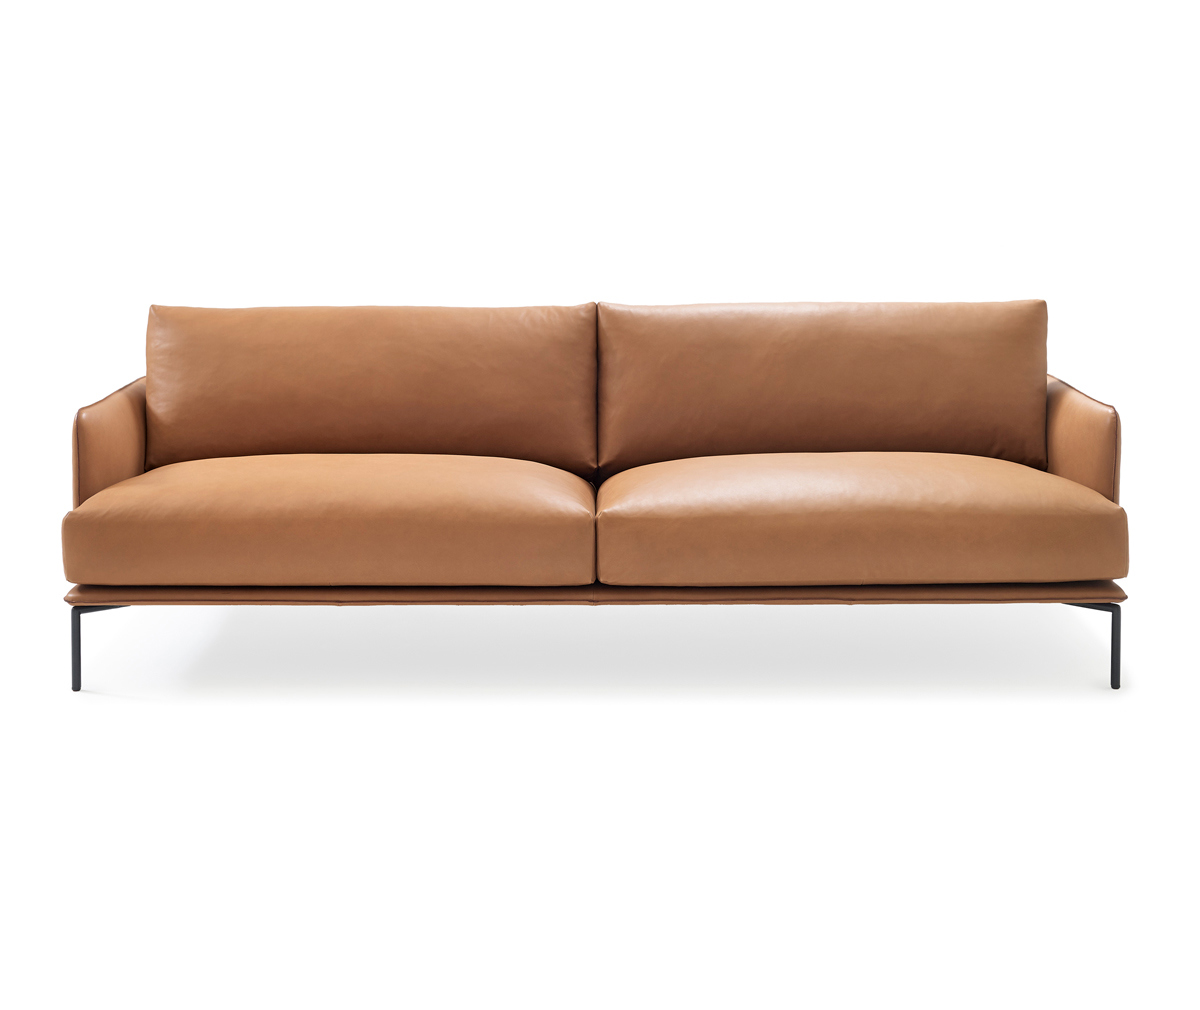 Baron-sohva